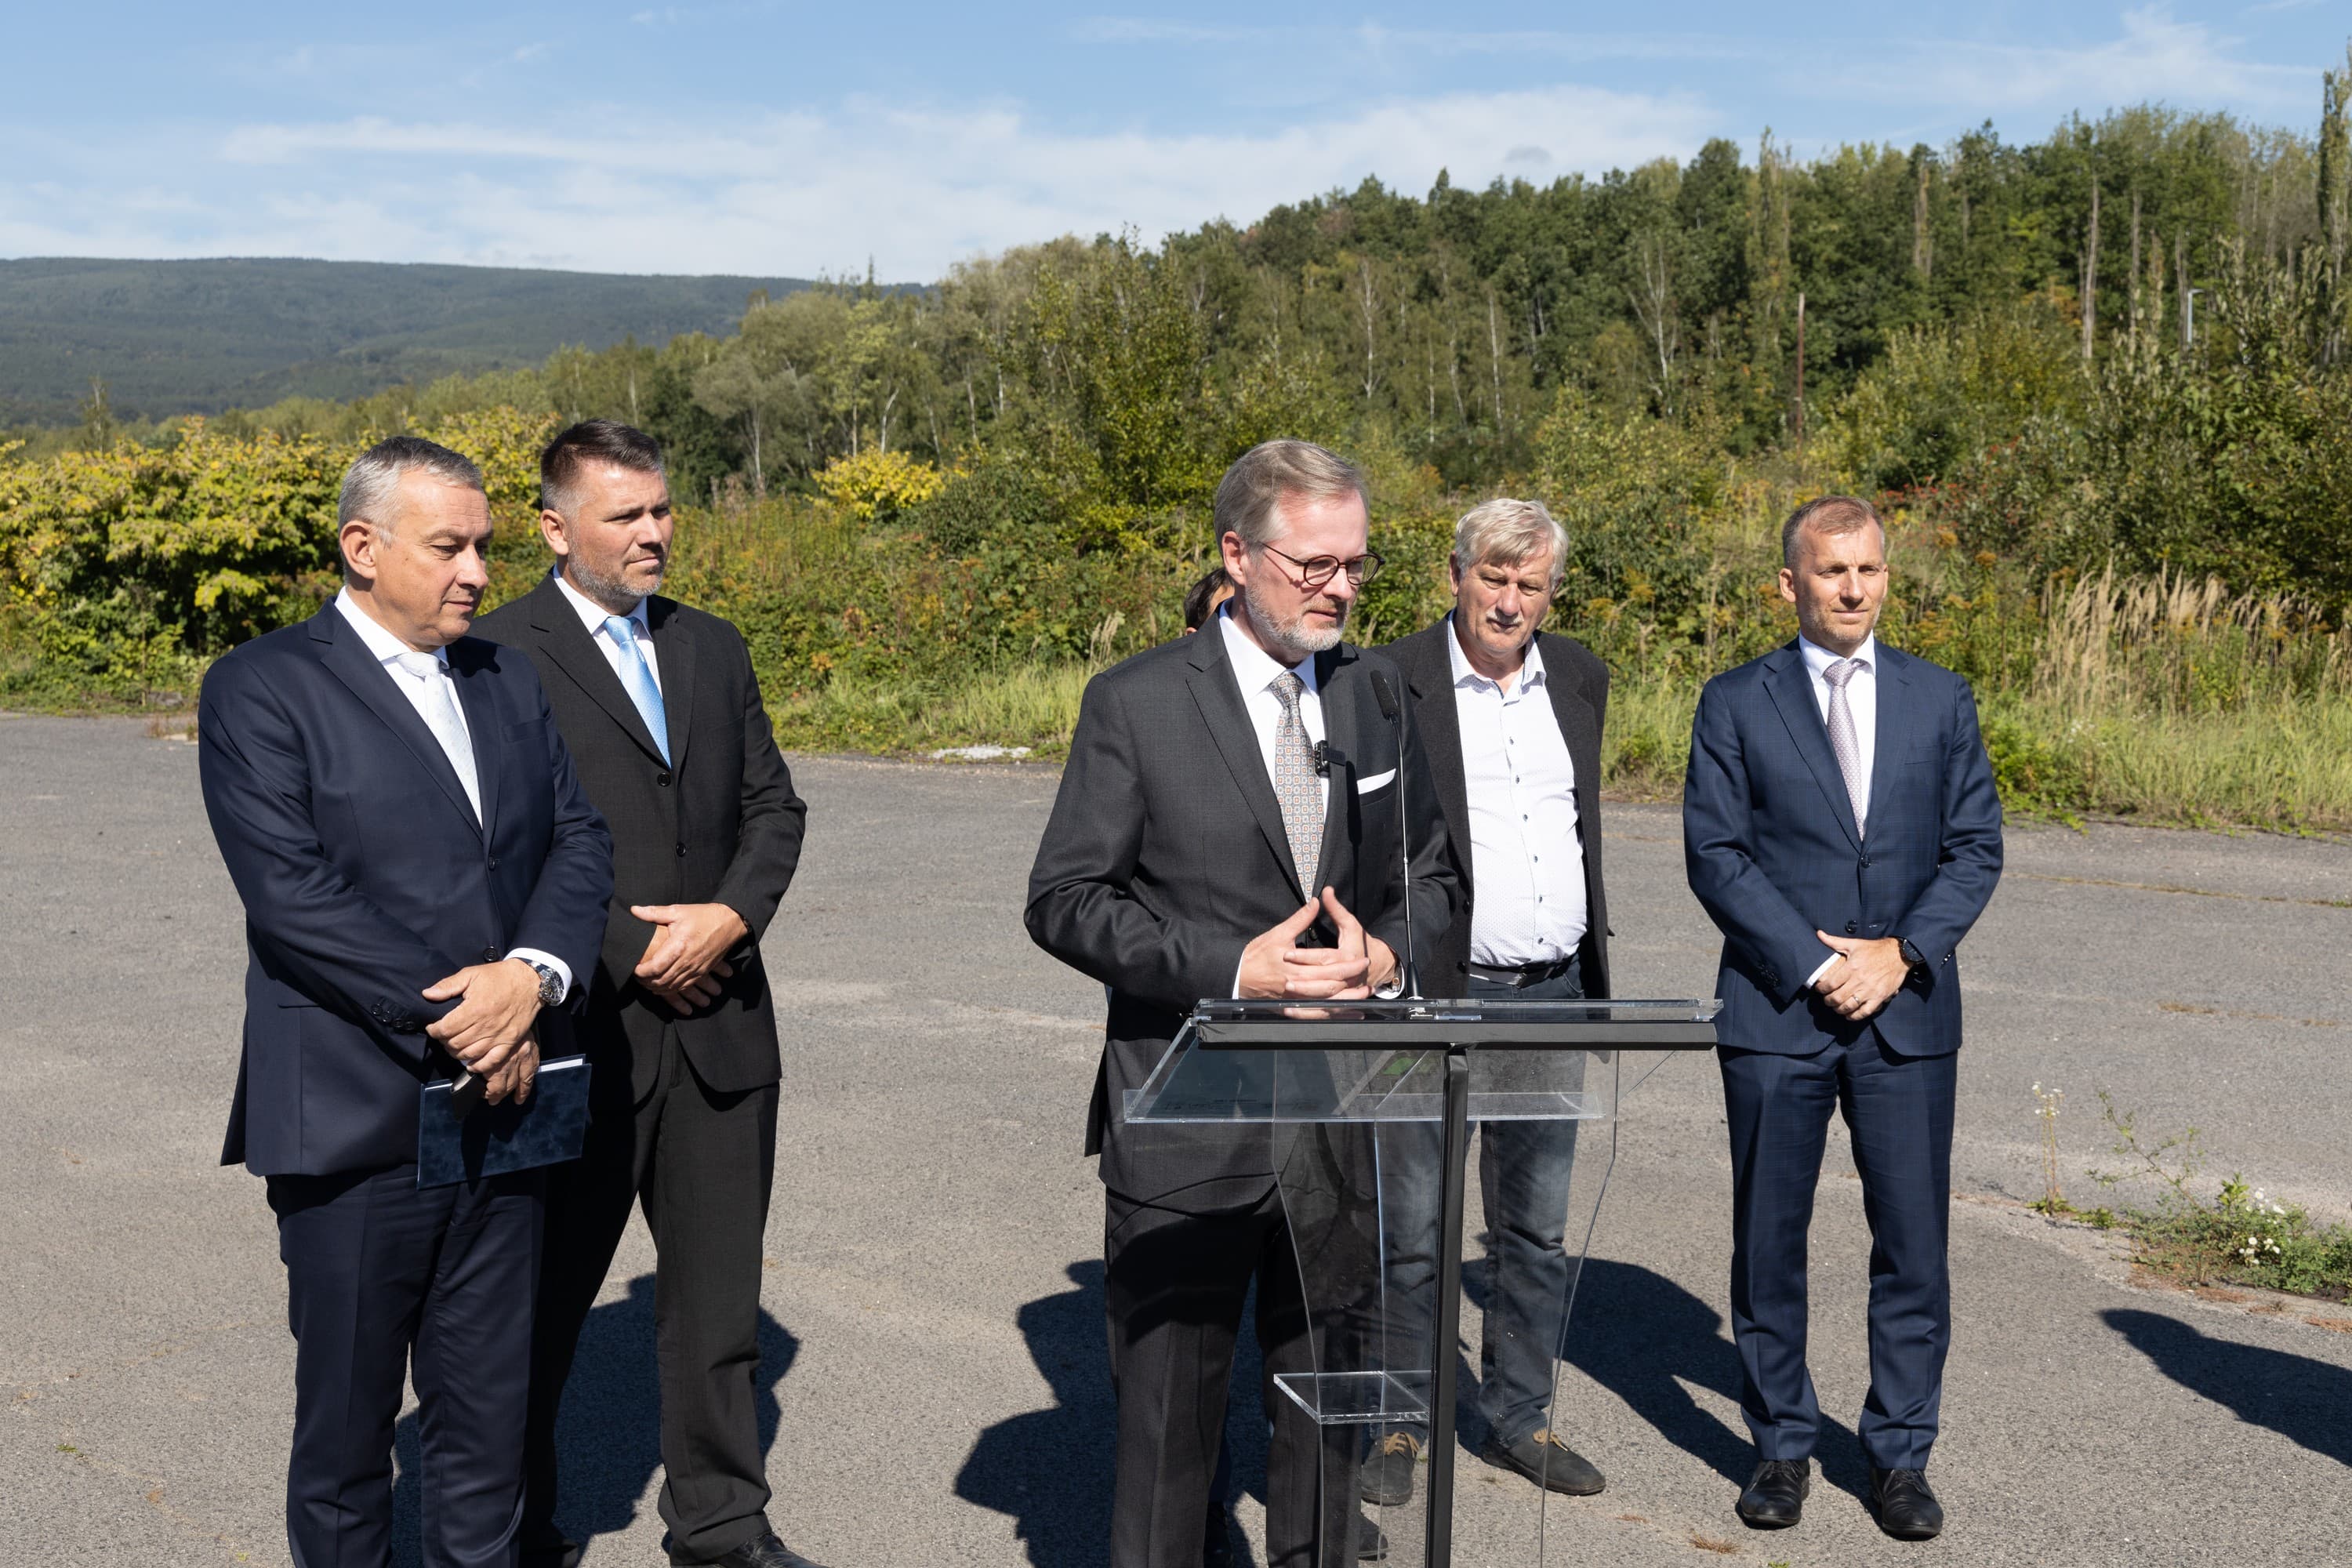 Premiér Fiala v Ústeckém kraji: Lithium je obrovská šance pro region a celé Česko